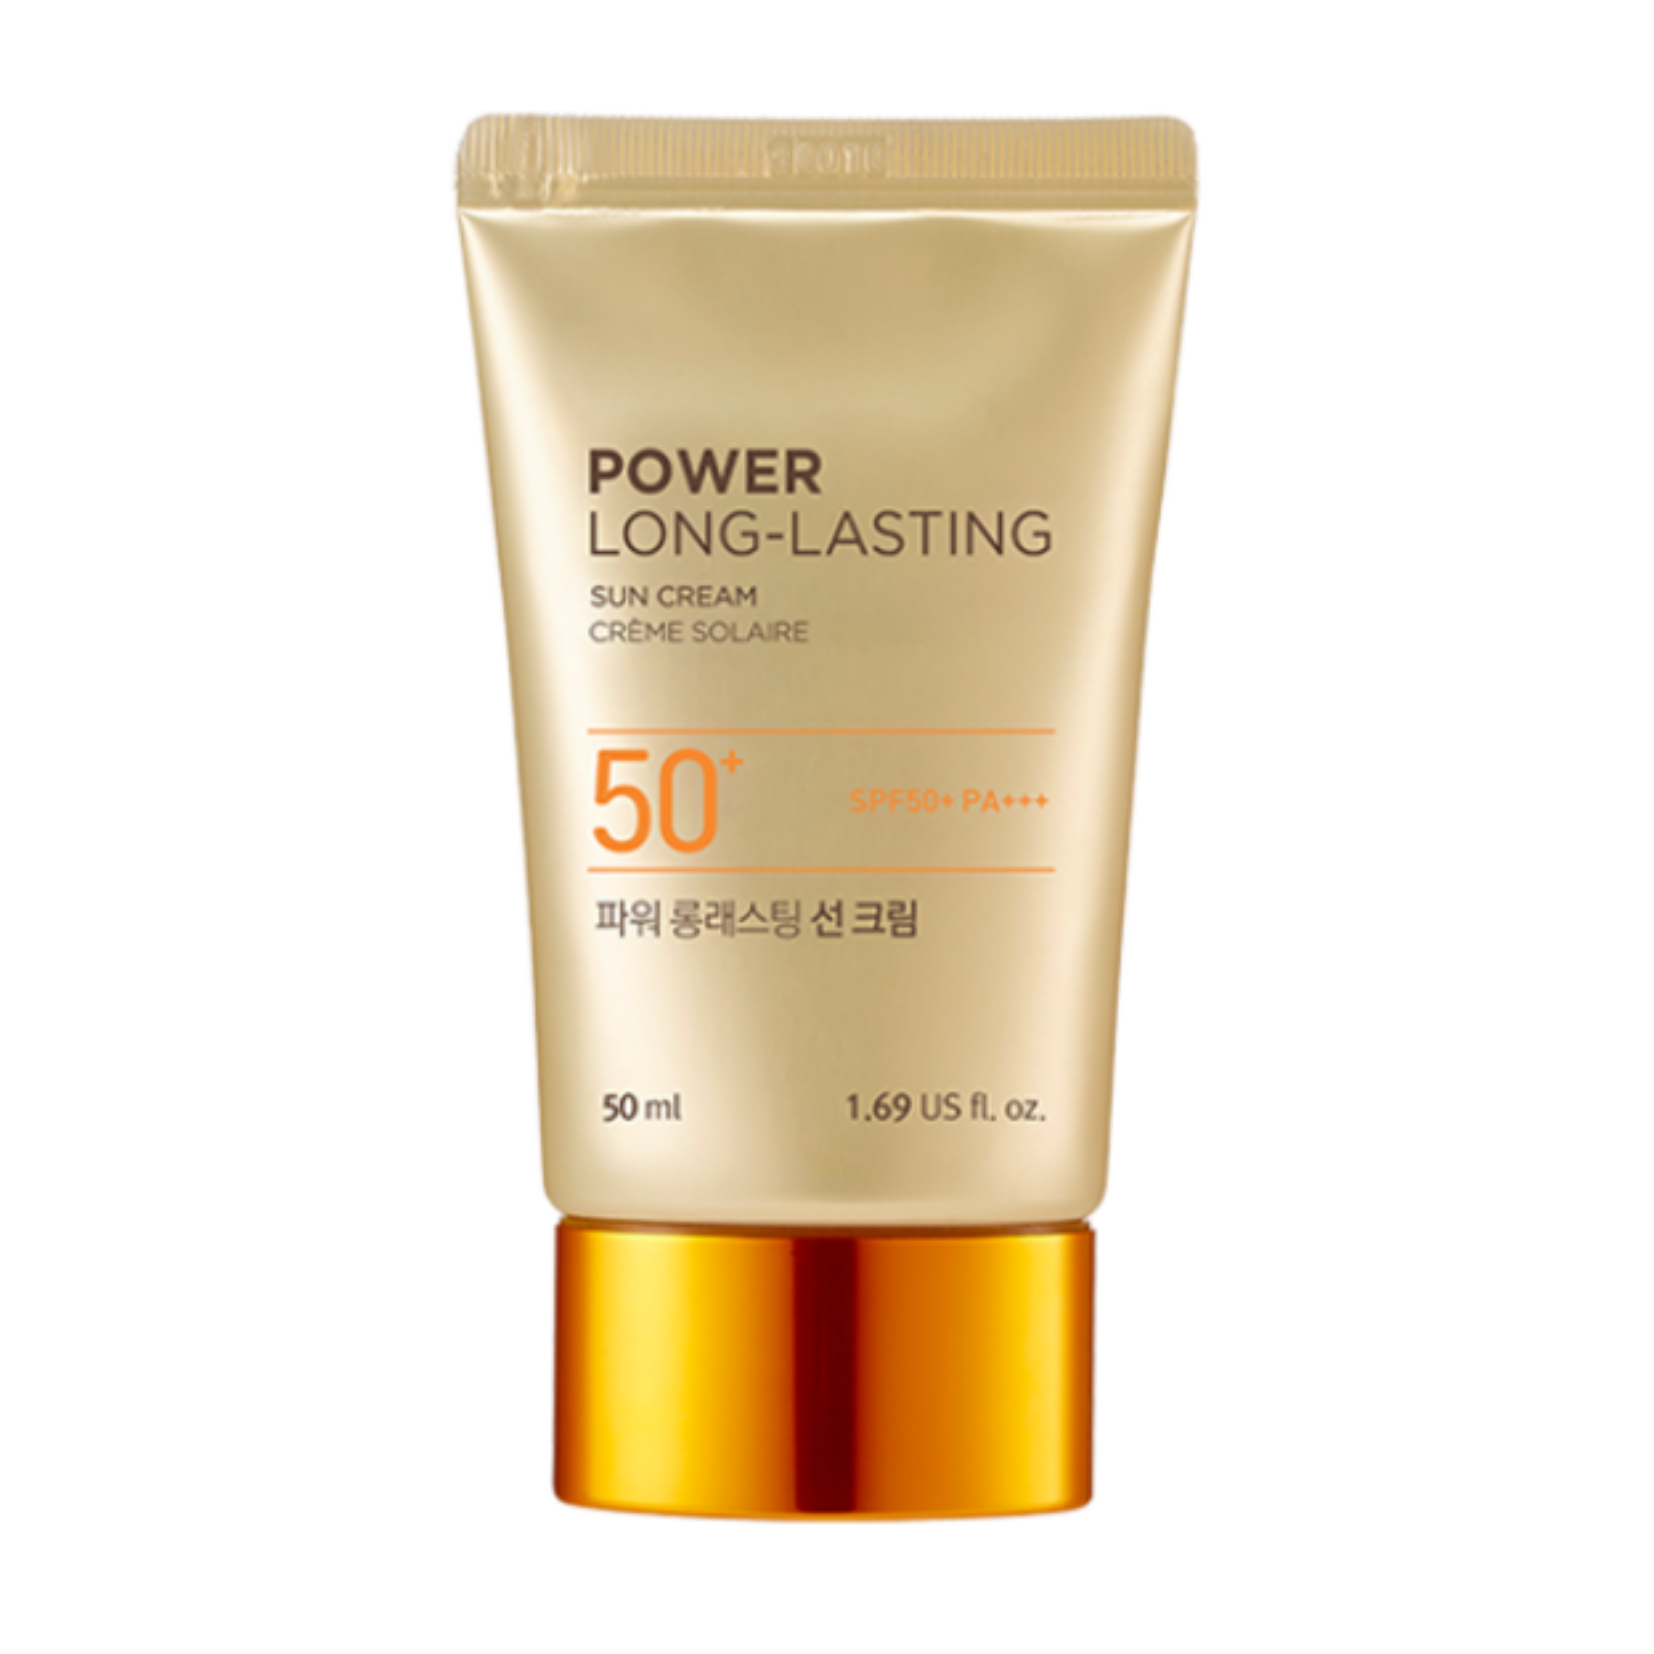 Power Long-Lasting Sun Cream SPF50+ PA+++